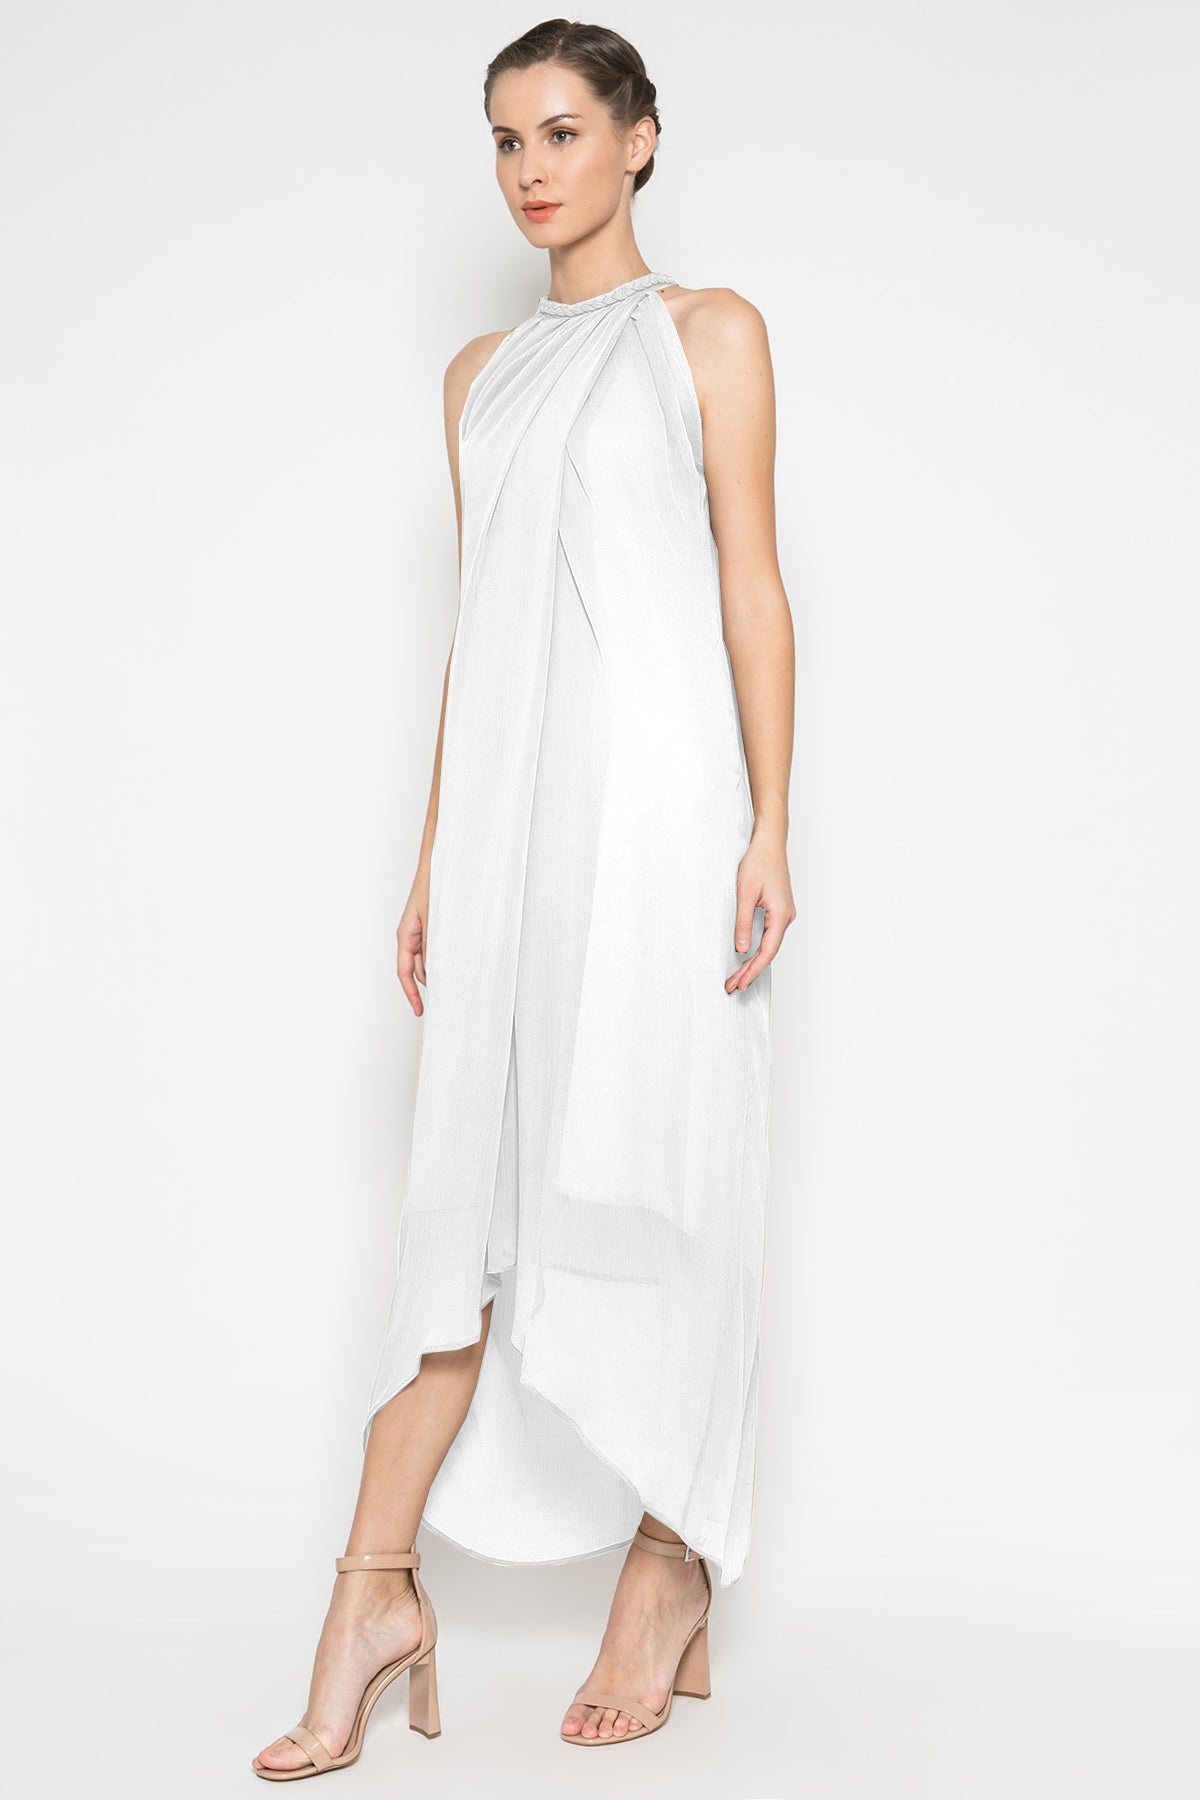 Sabine White Dress